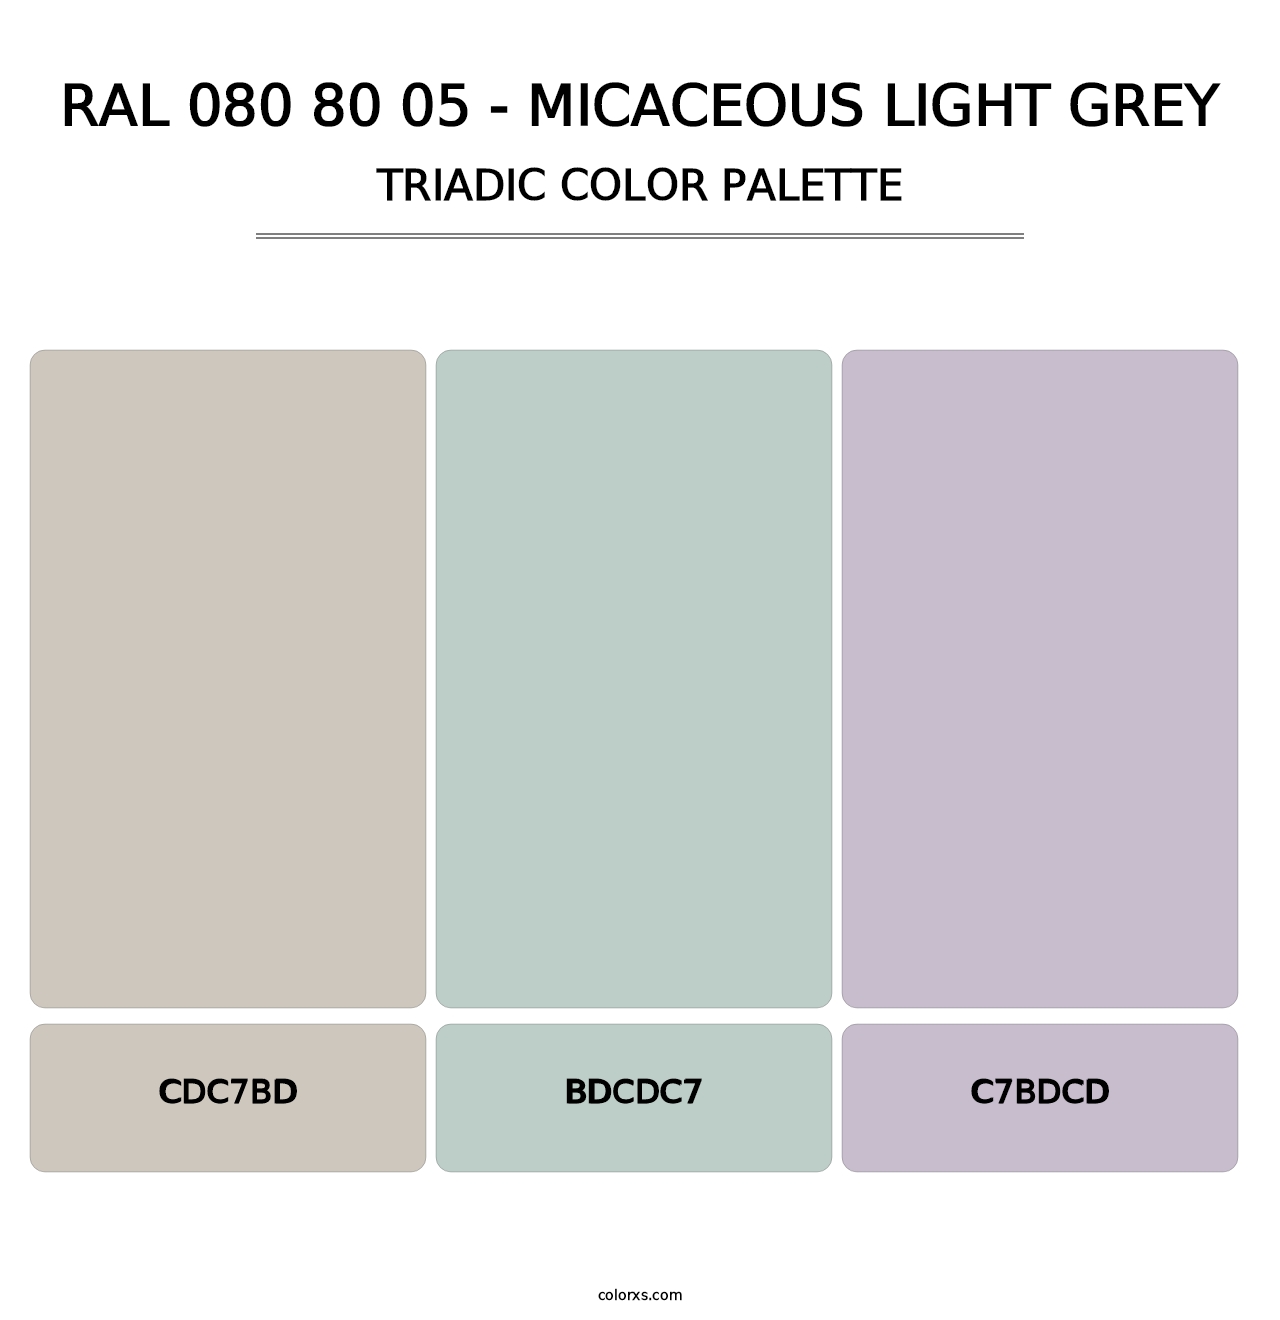 RAL 080 80 05 - Micaceous Light Grey - Triadic Color Palette